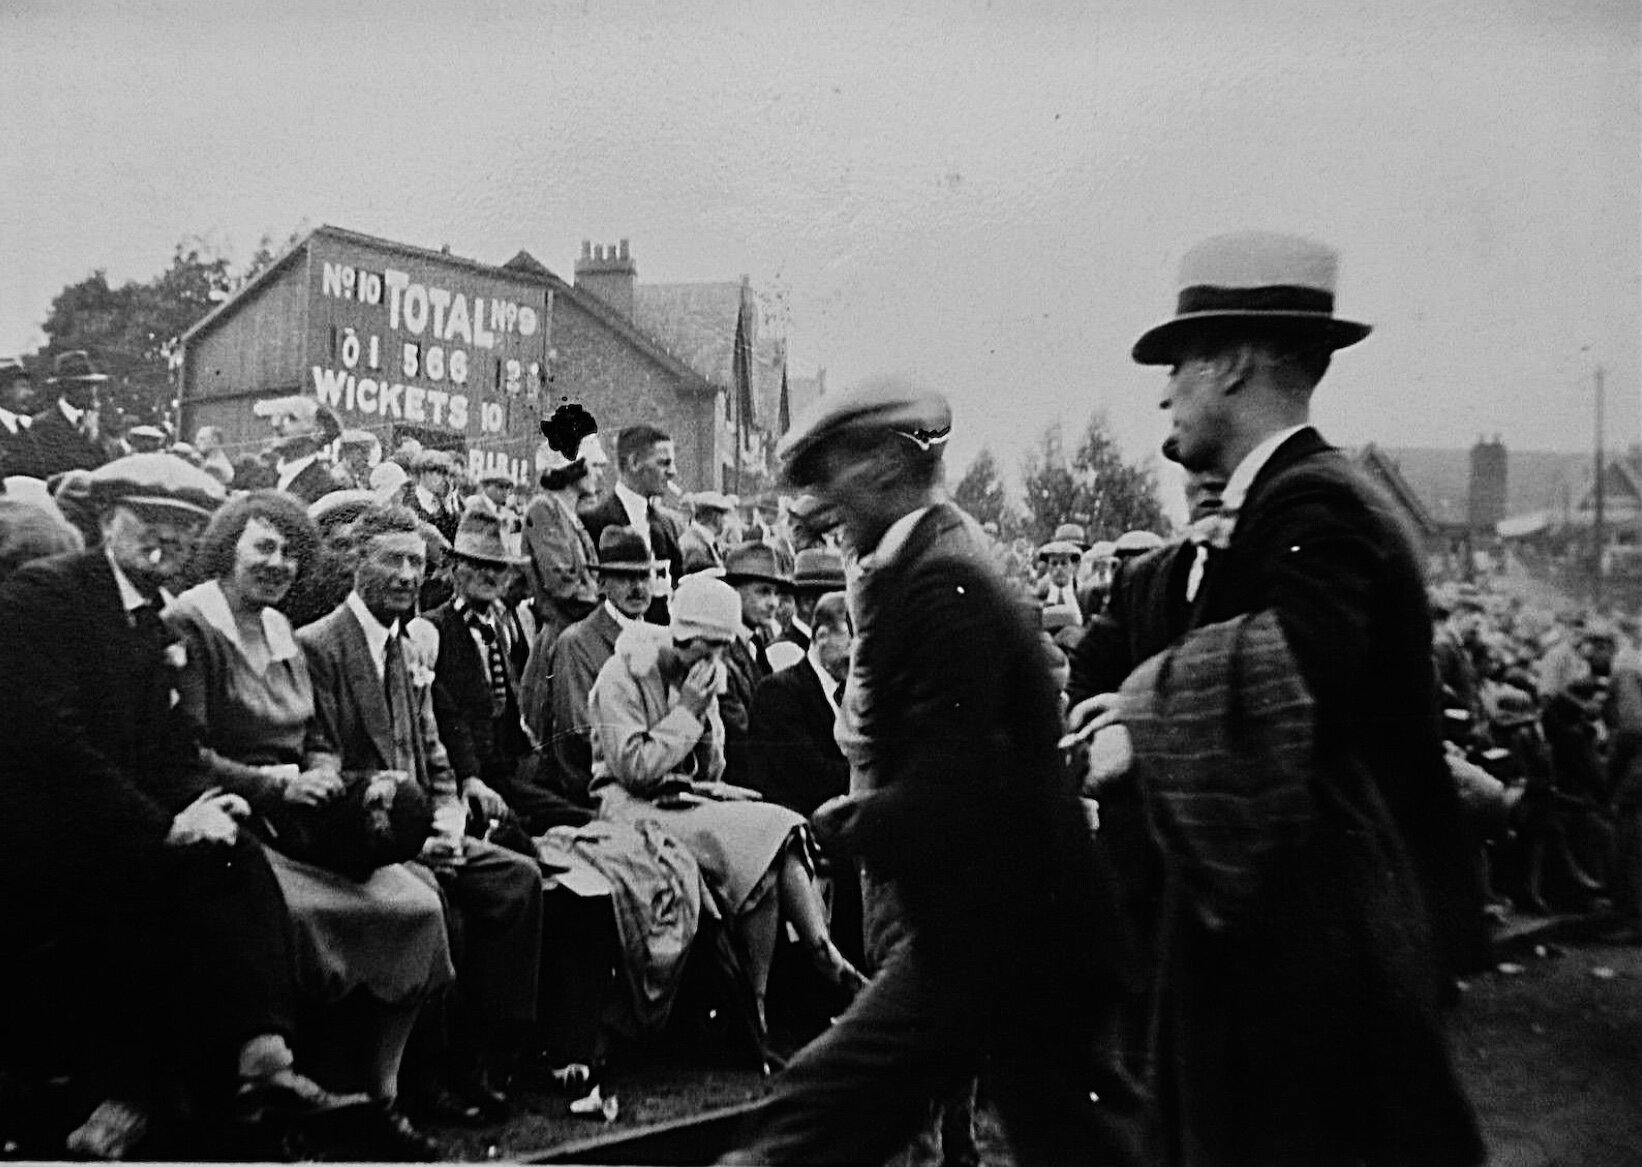 Inter-War Spectators